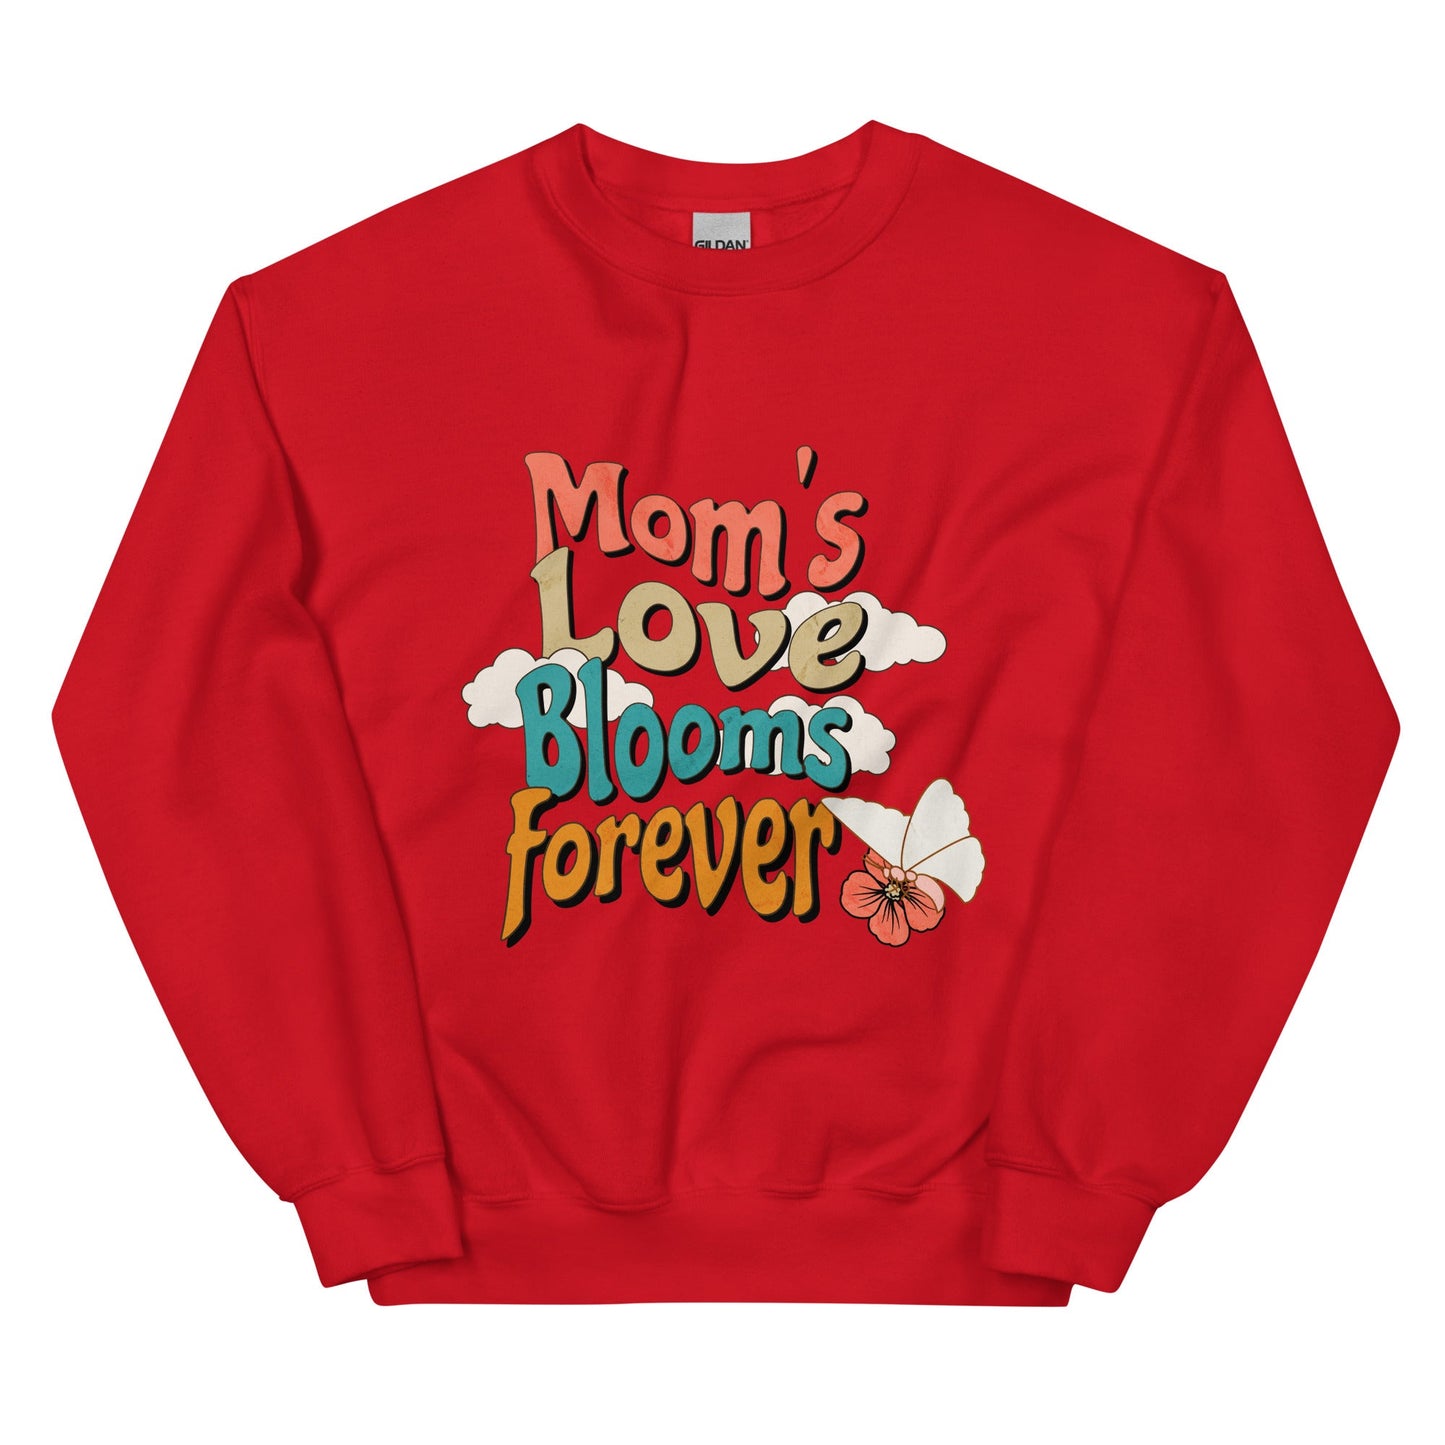 Mom's Love Blooms Forever Crewneck Sweatshirt-crewneck-Red-S-mysticalcherry